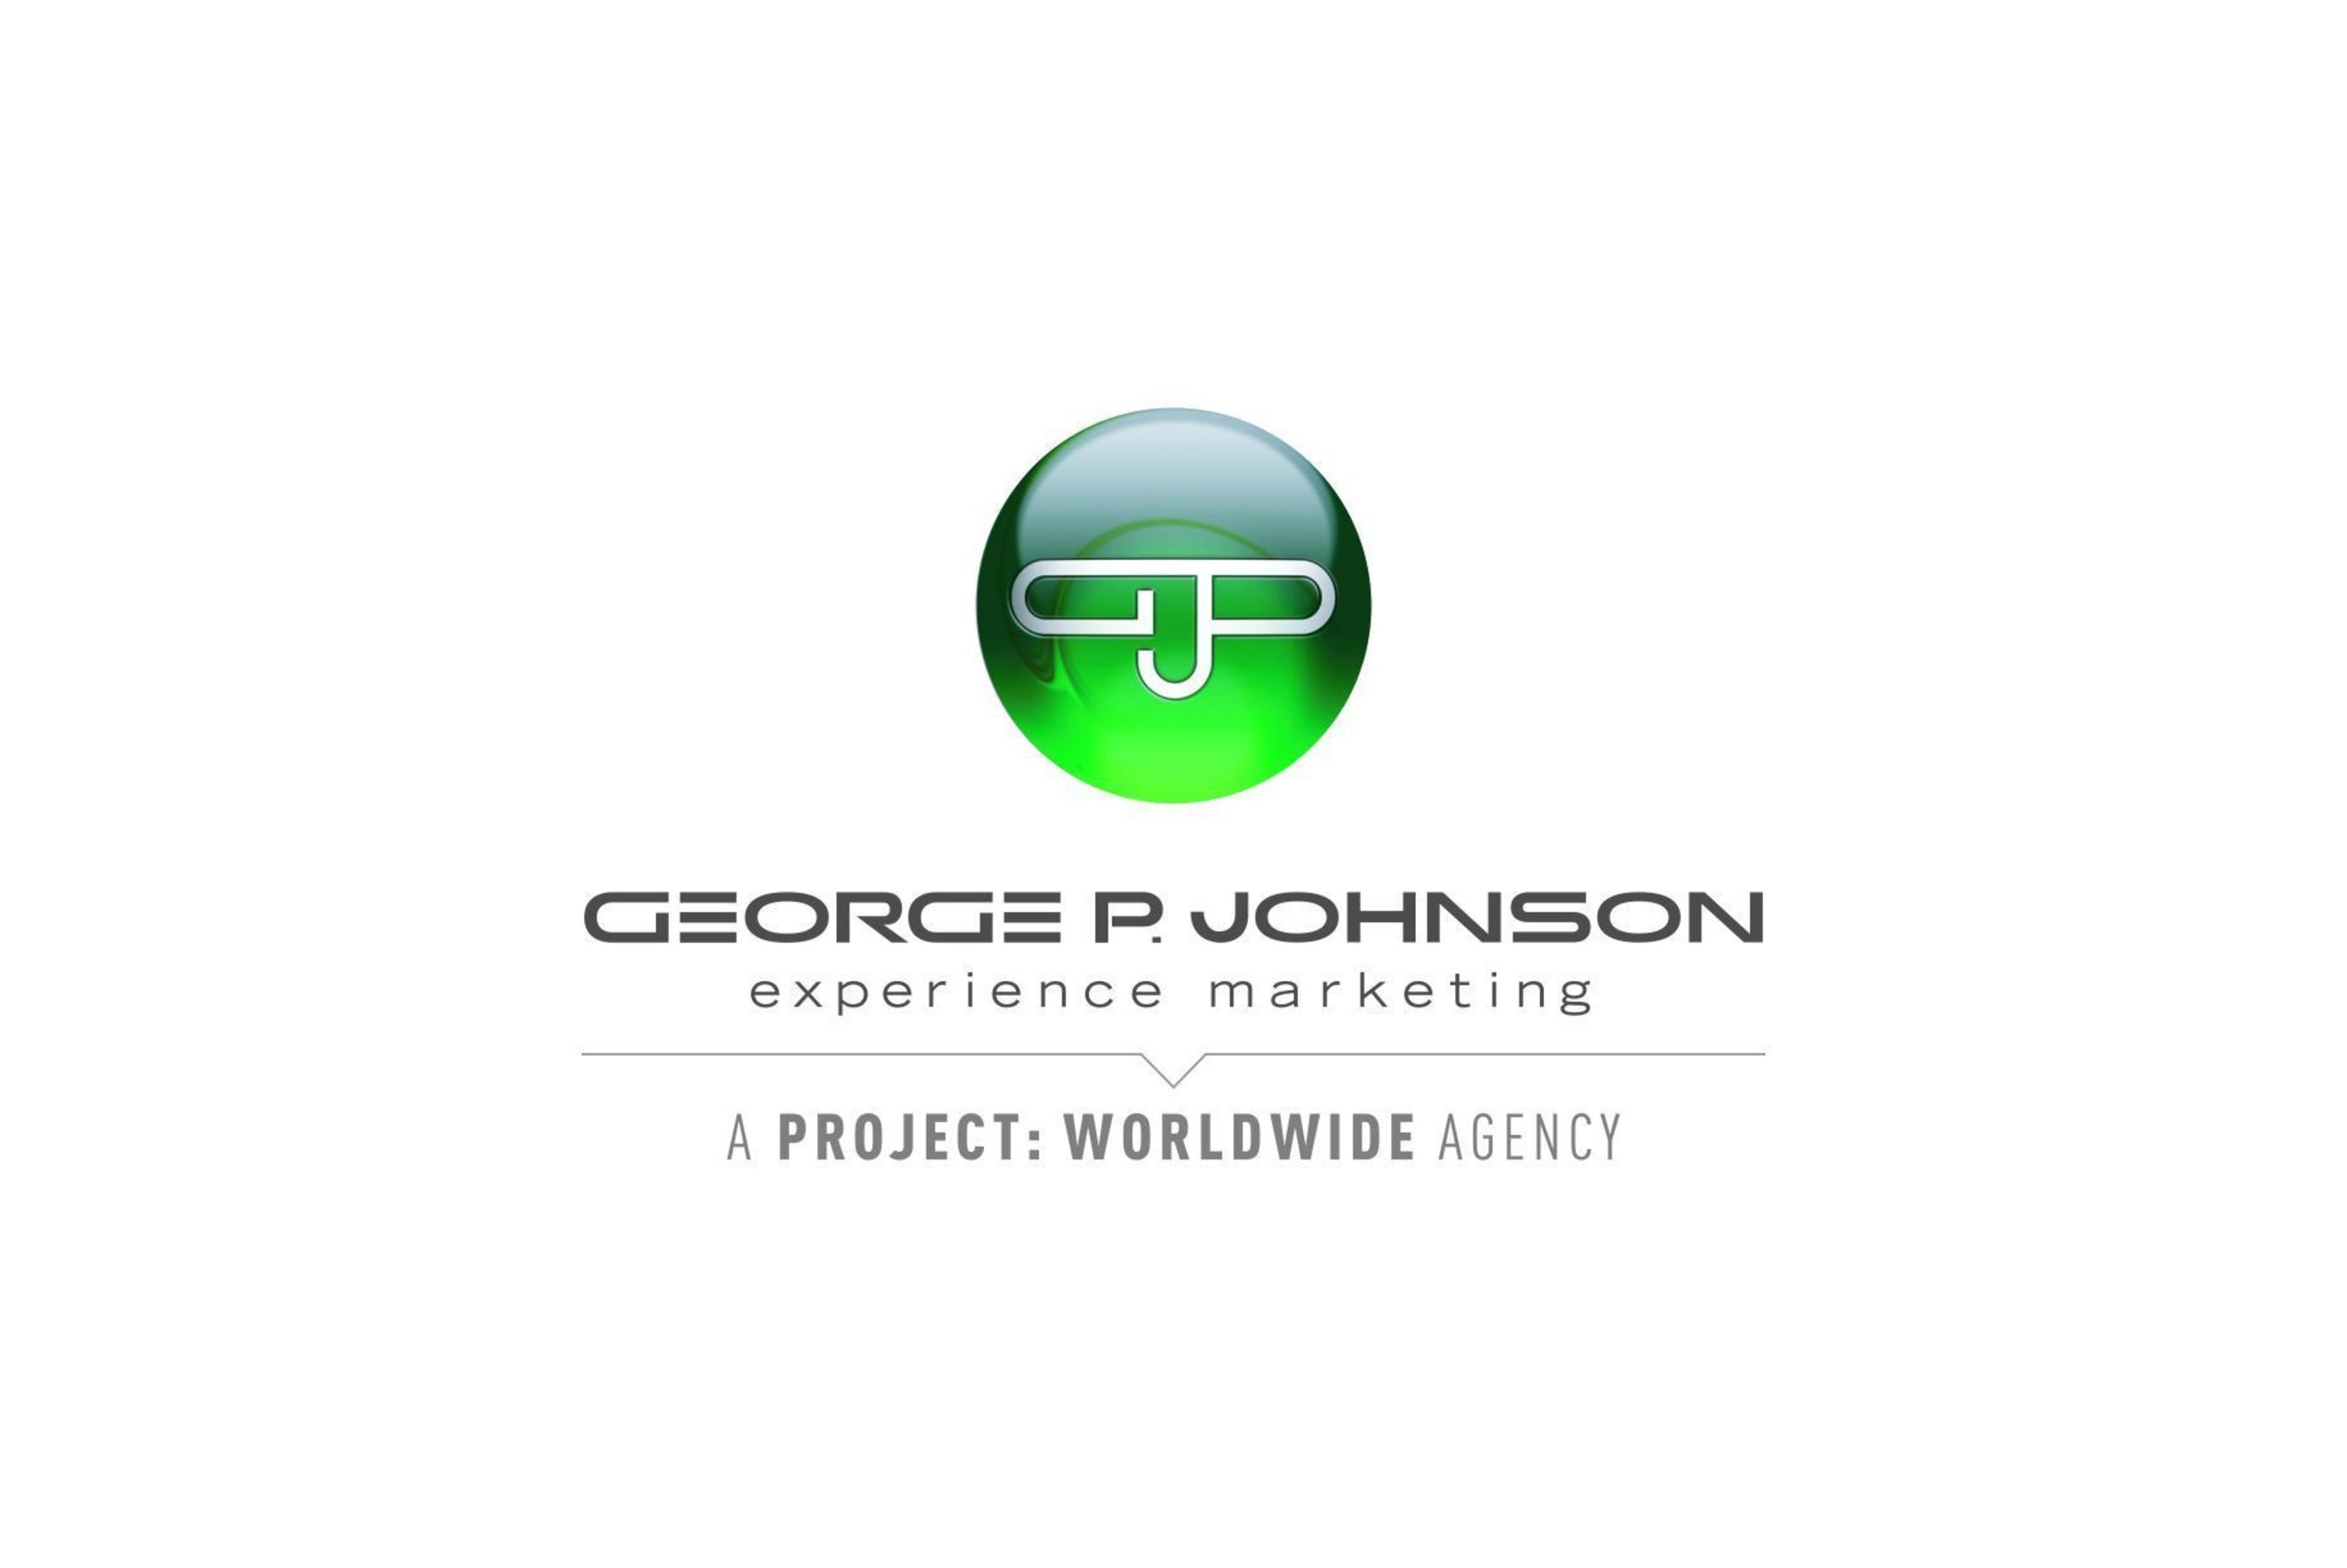 george p. johnson (gpj) india bags alfresco's event marketing account